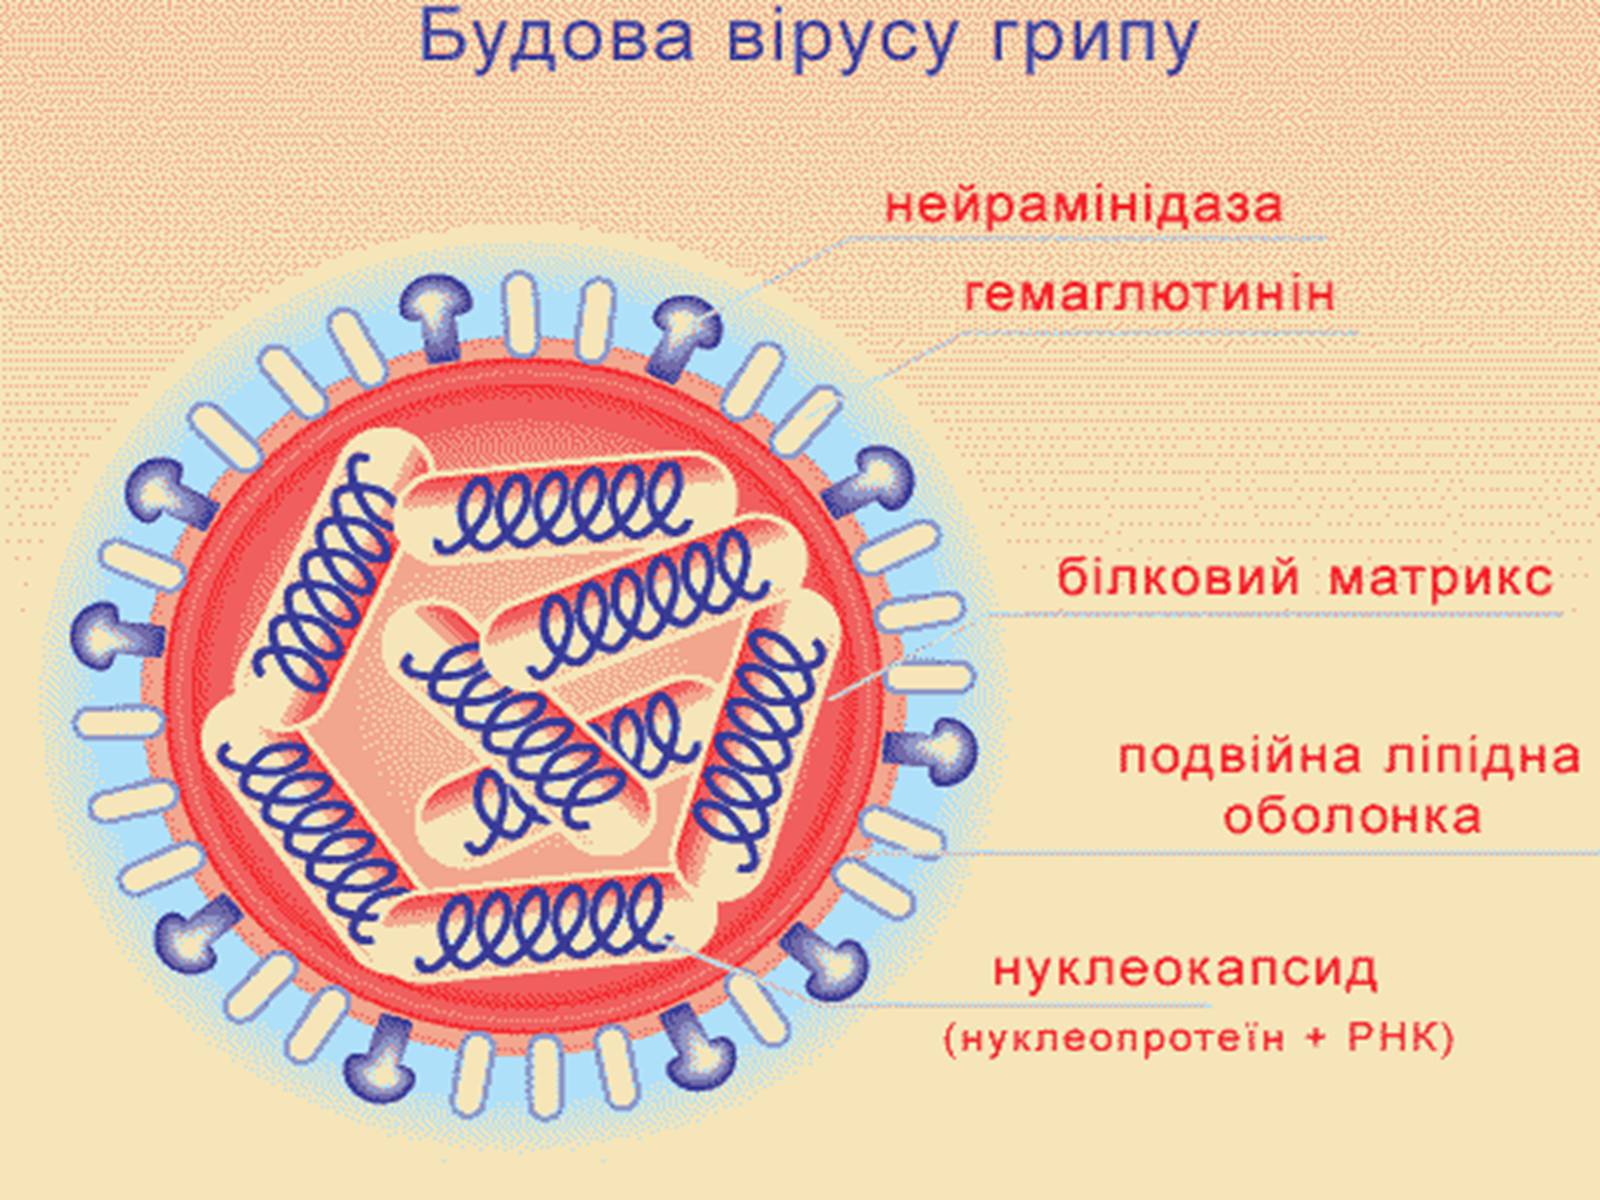 Варианты вируса гриппа. Структура вириона вируса гриппа. Строение вириона гриппа типа а. Структура вируса гриппа микробиология. Вирус гриппа строение биология.